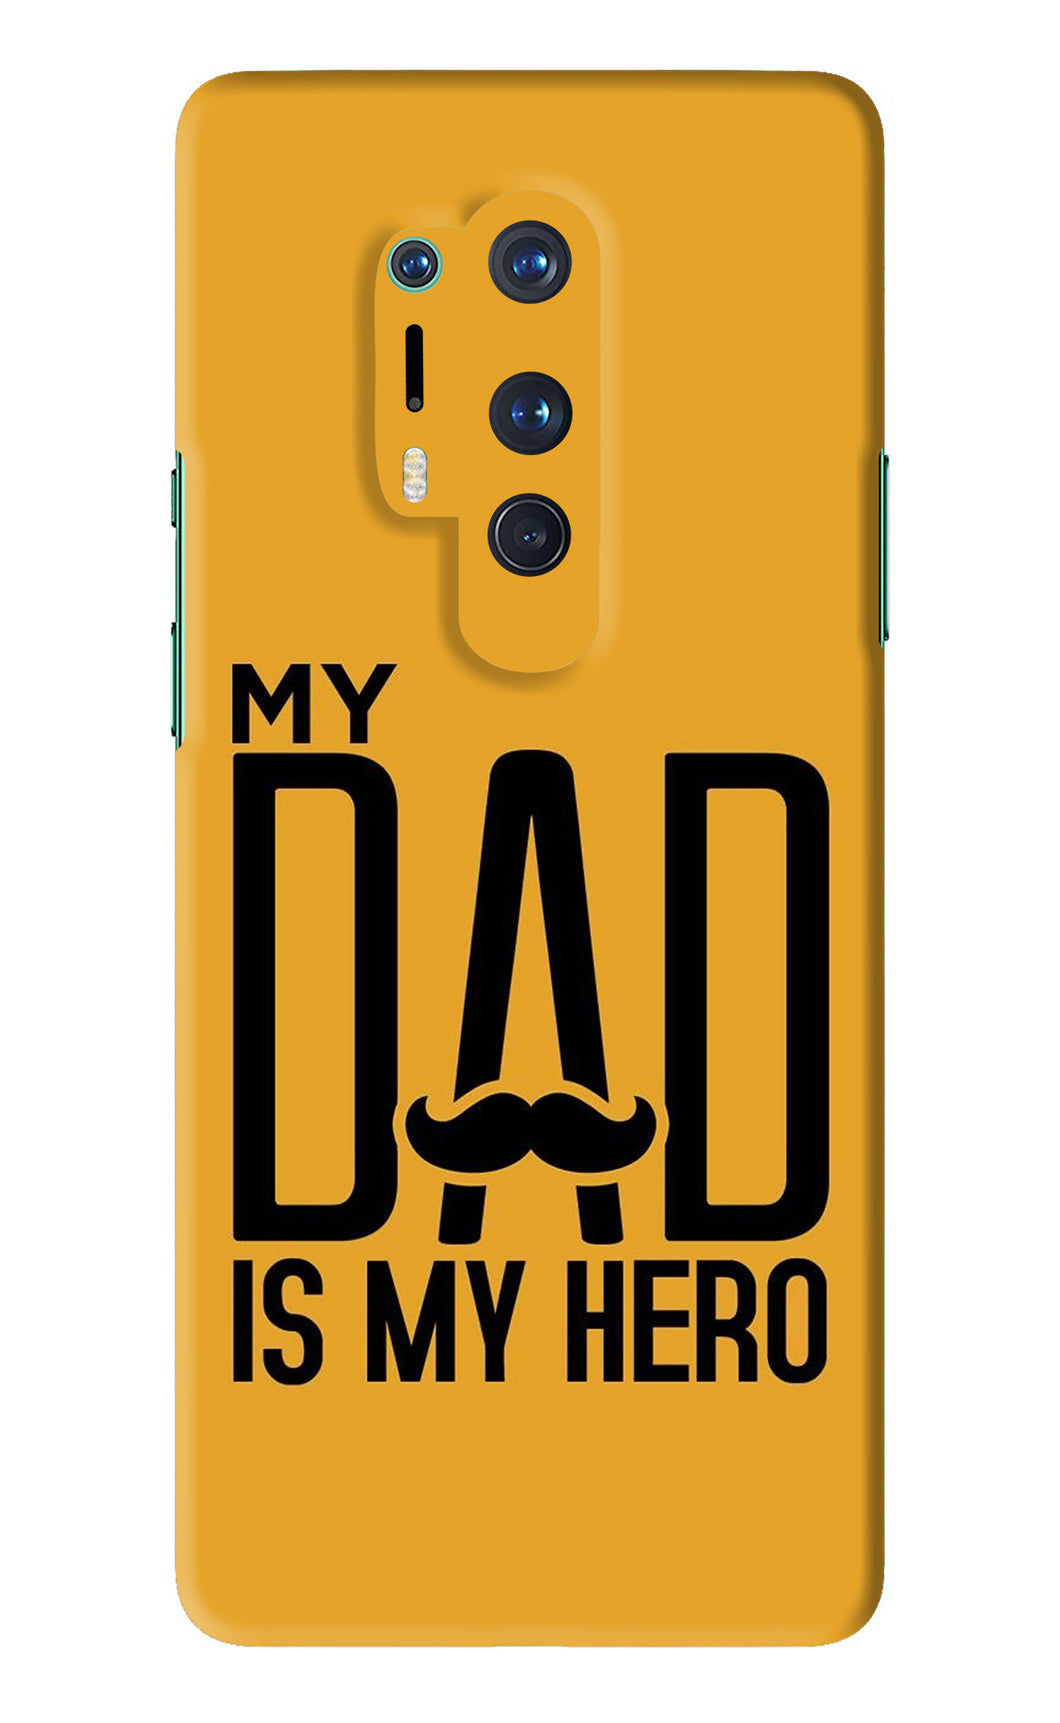 My Dad Is My Hero OnePlus 8 Pro Back Skin Wrap